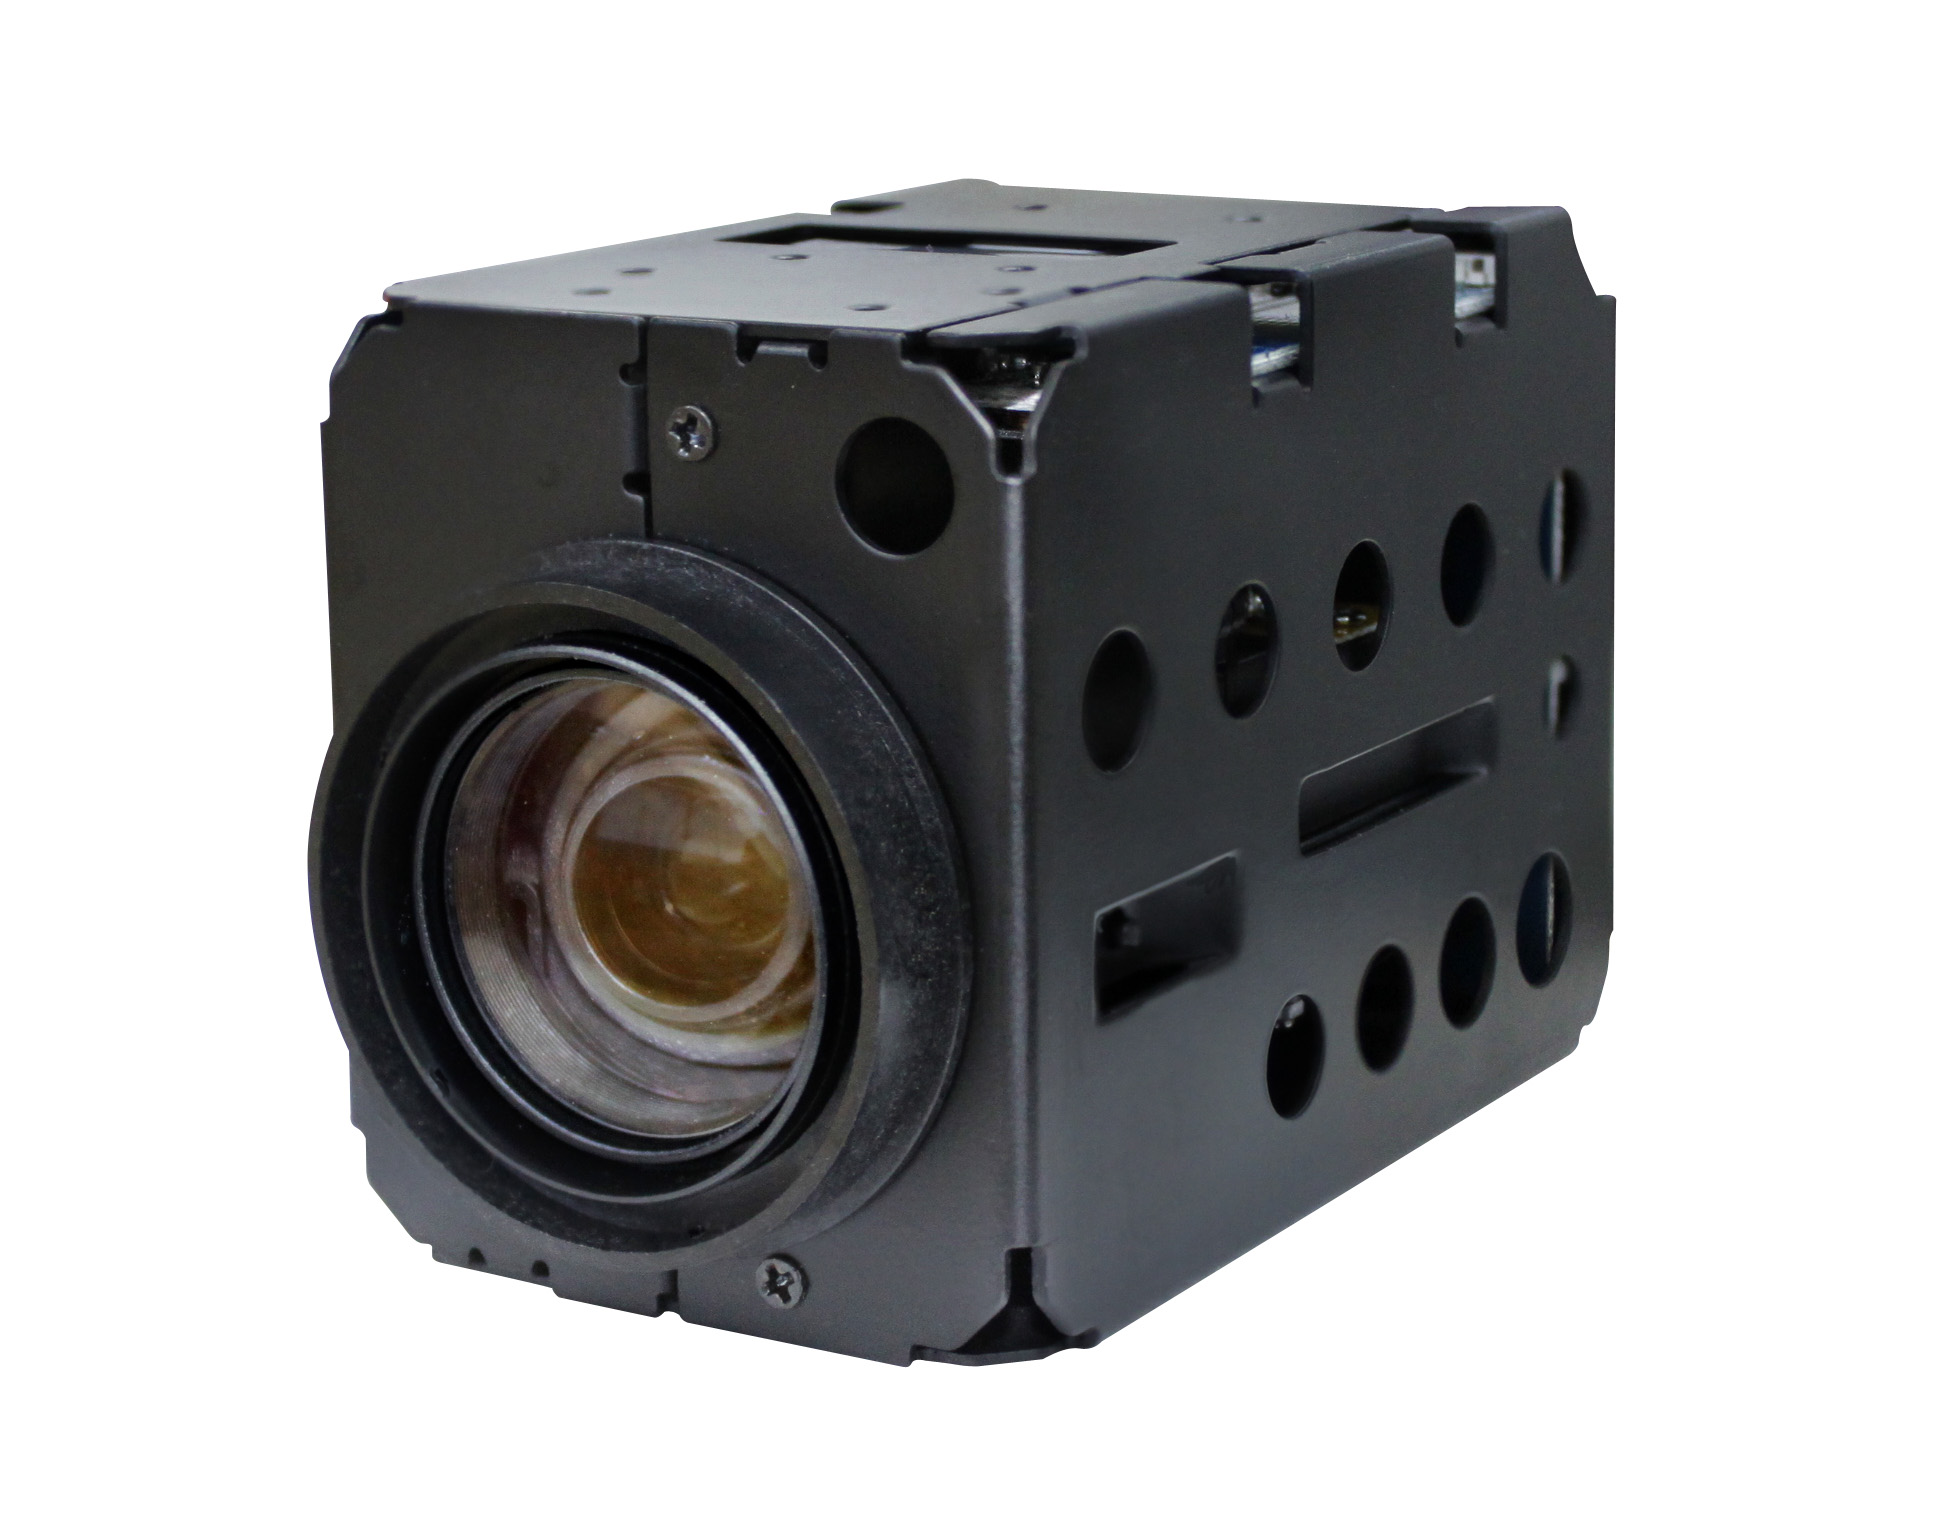 1/4 CMOS 800TVL DNR HD Zoom Camera Module Super low illumination